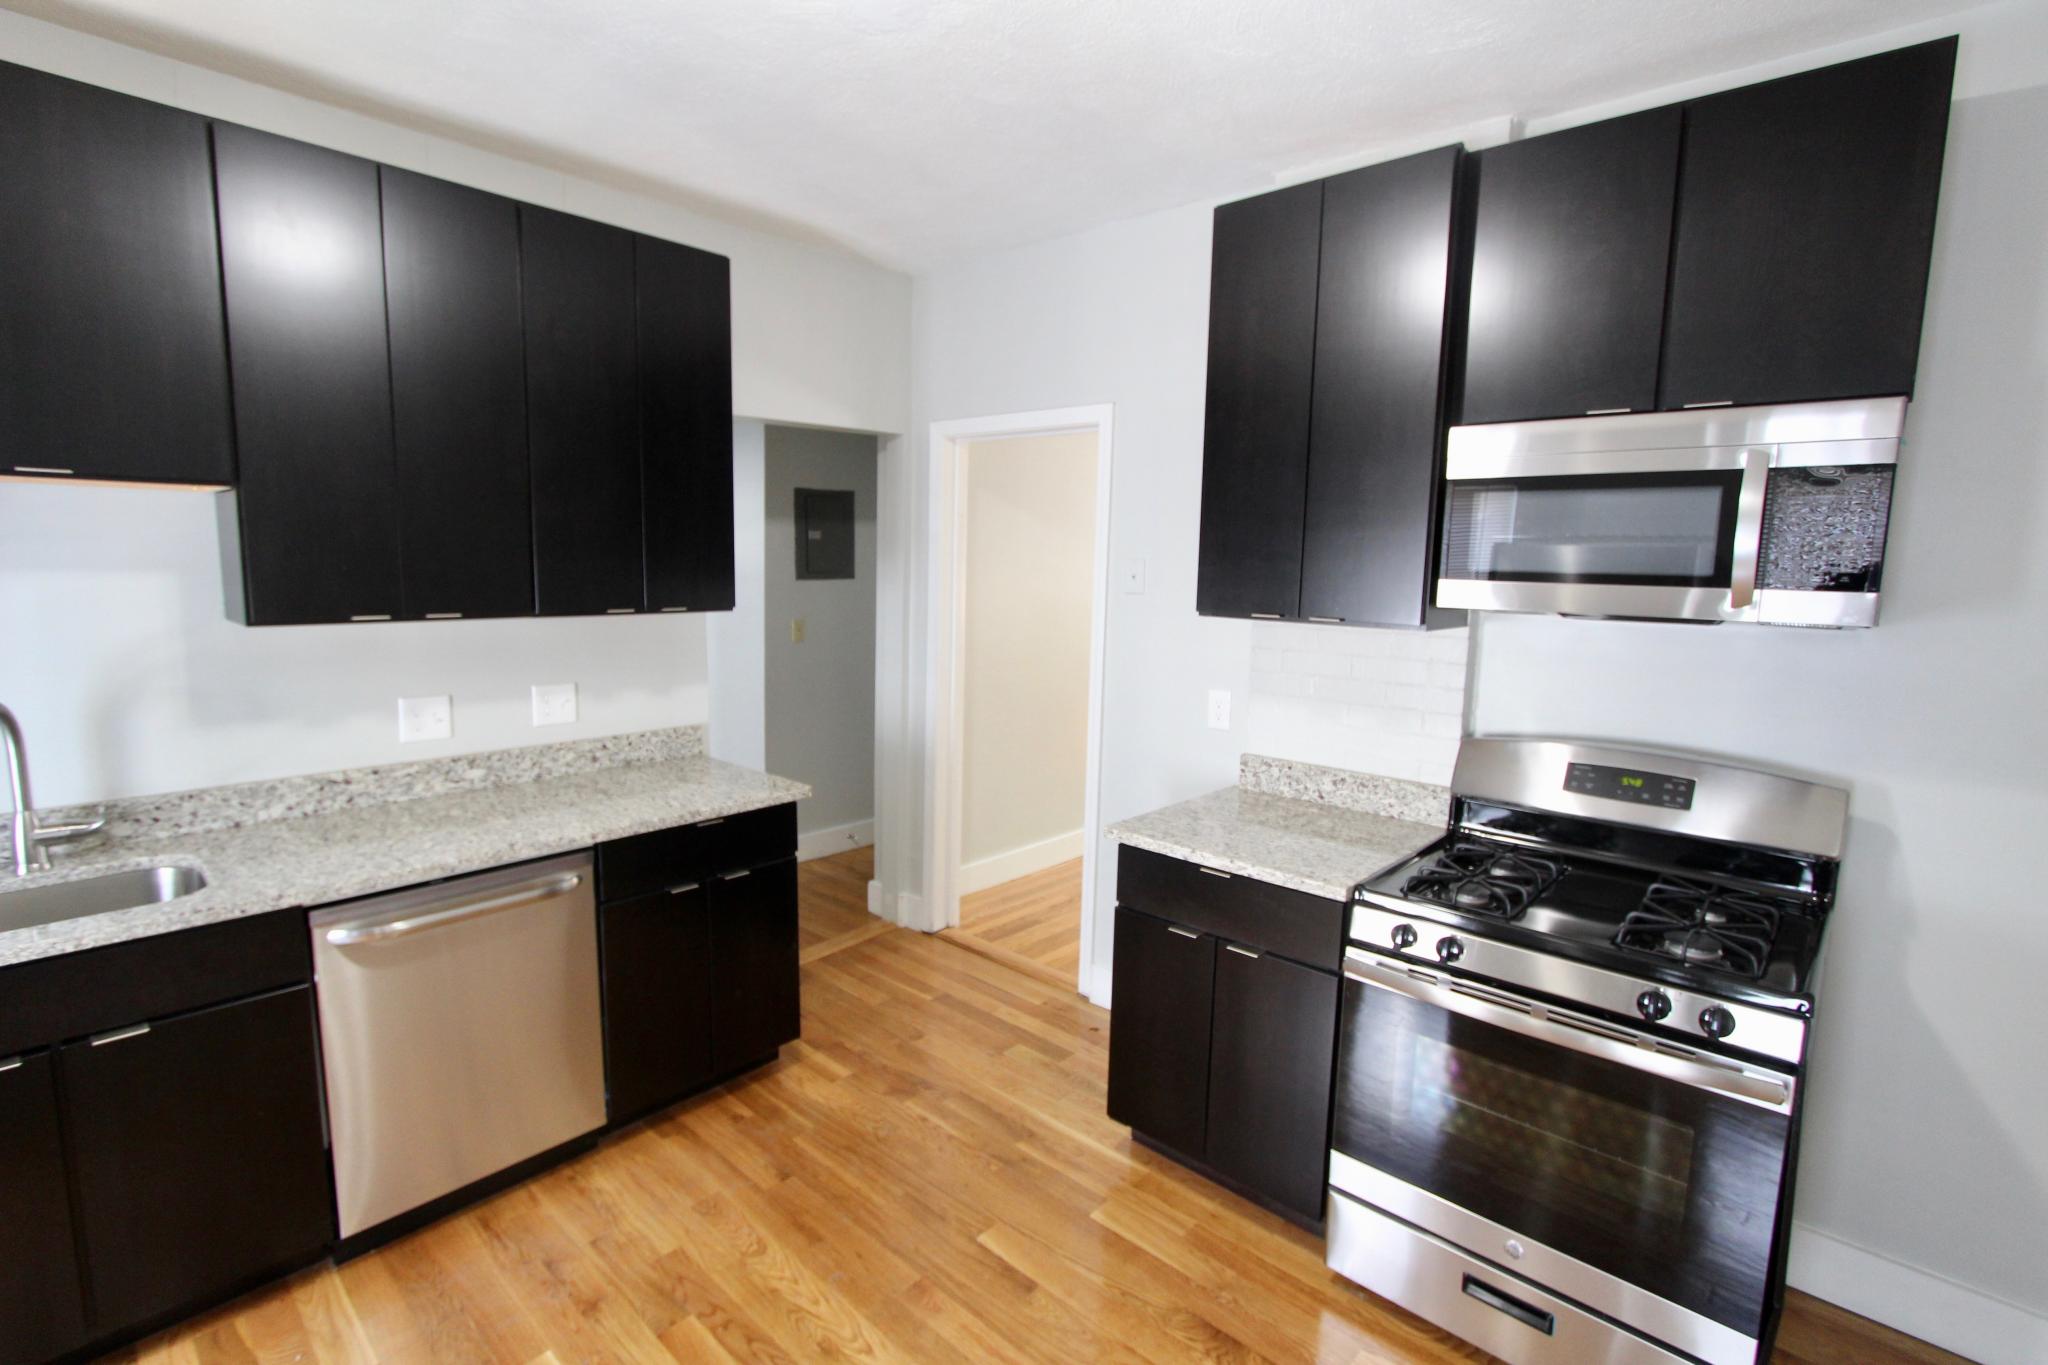 Photos of apartment on Sudan Steet,Boston MA 02125